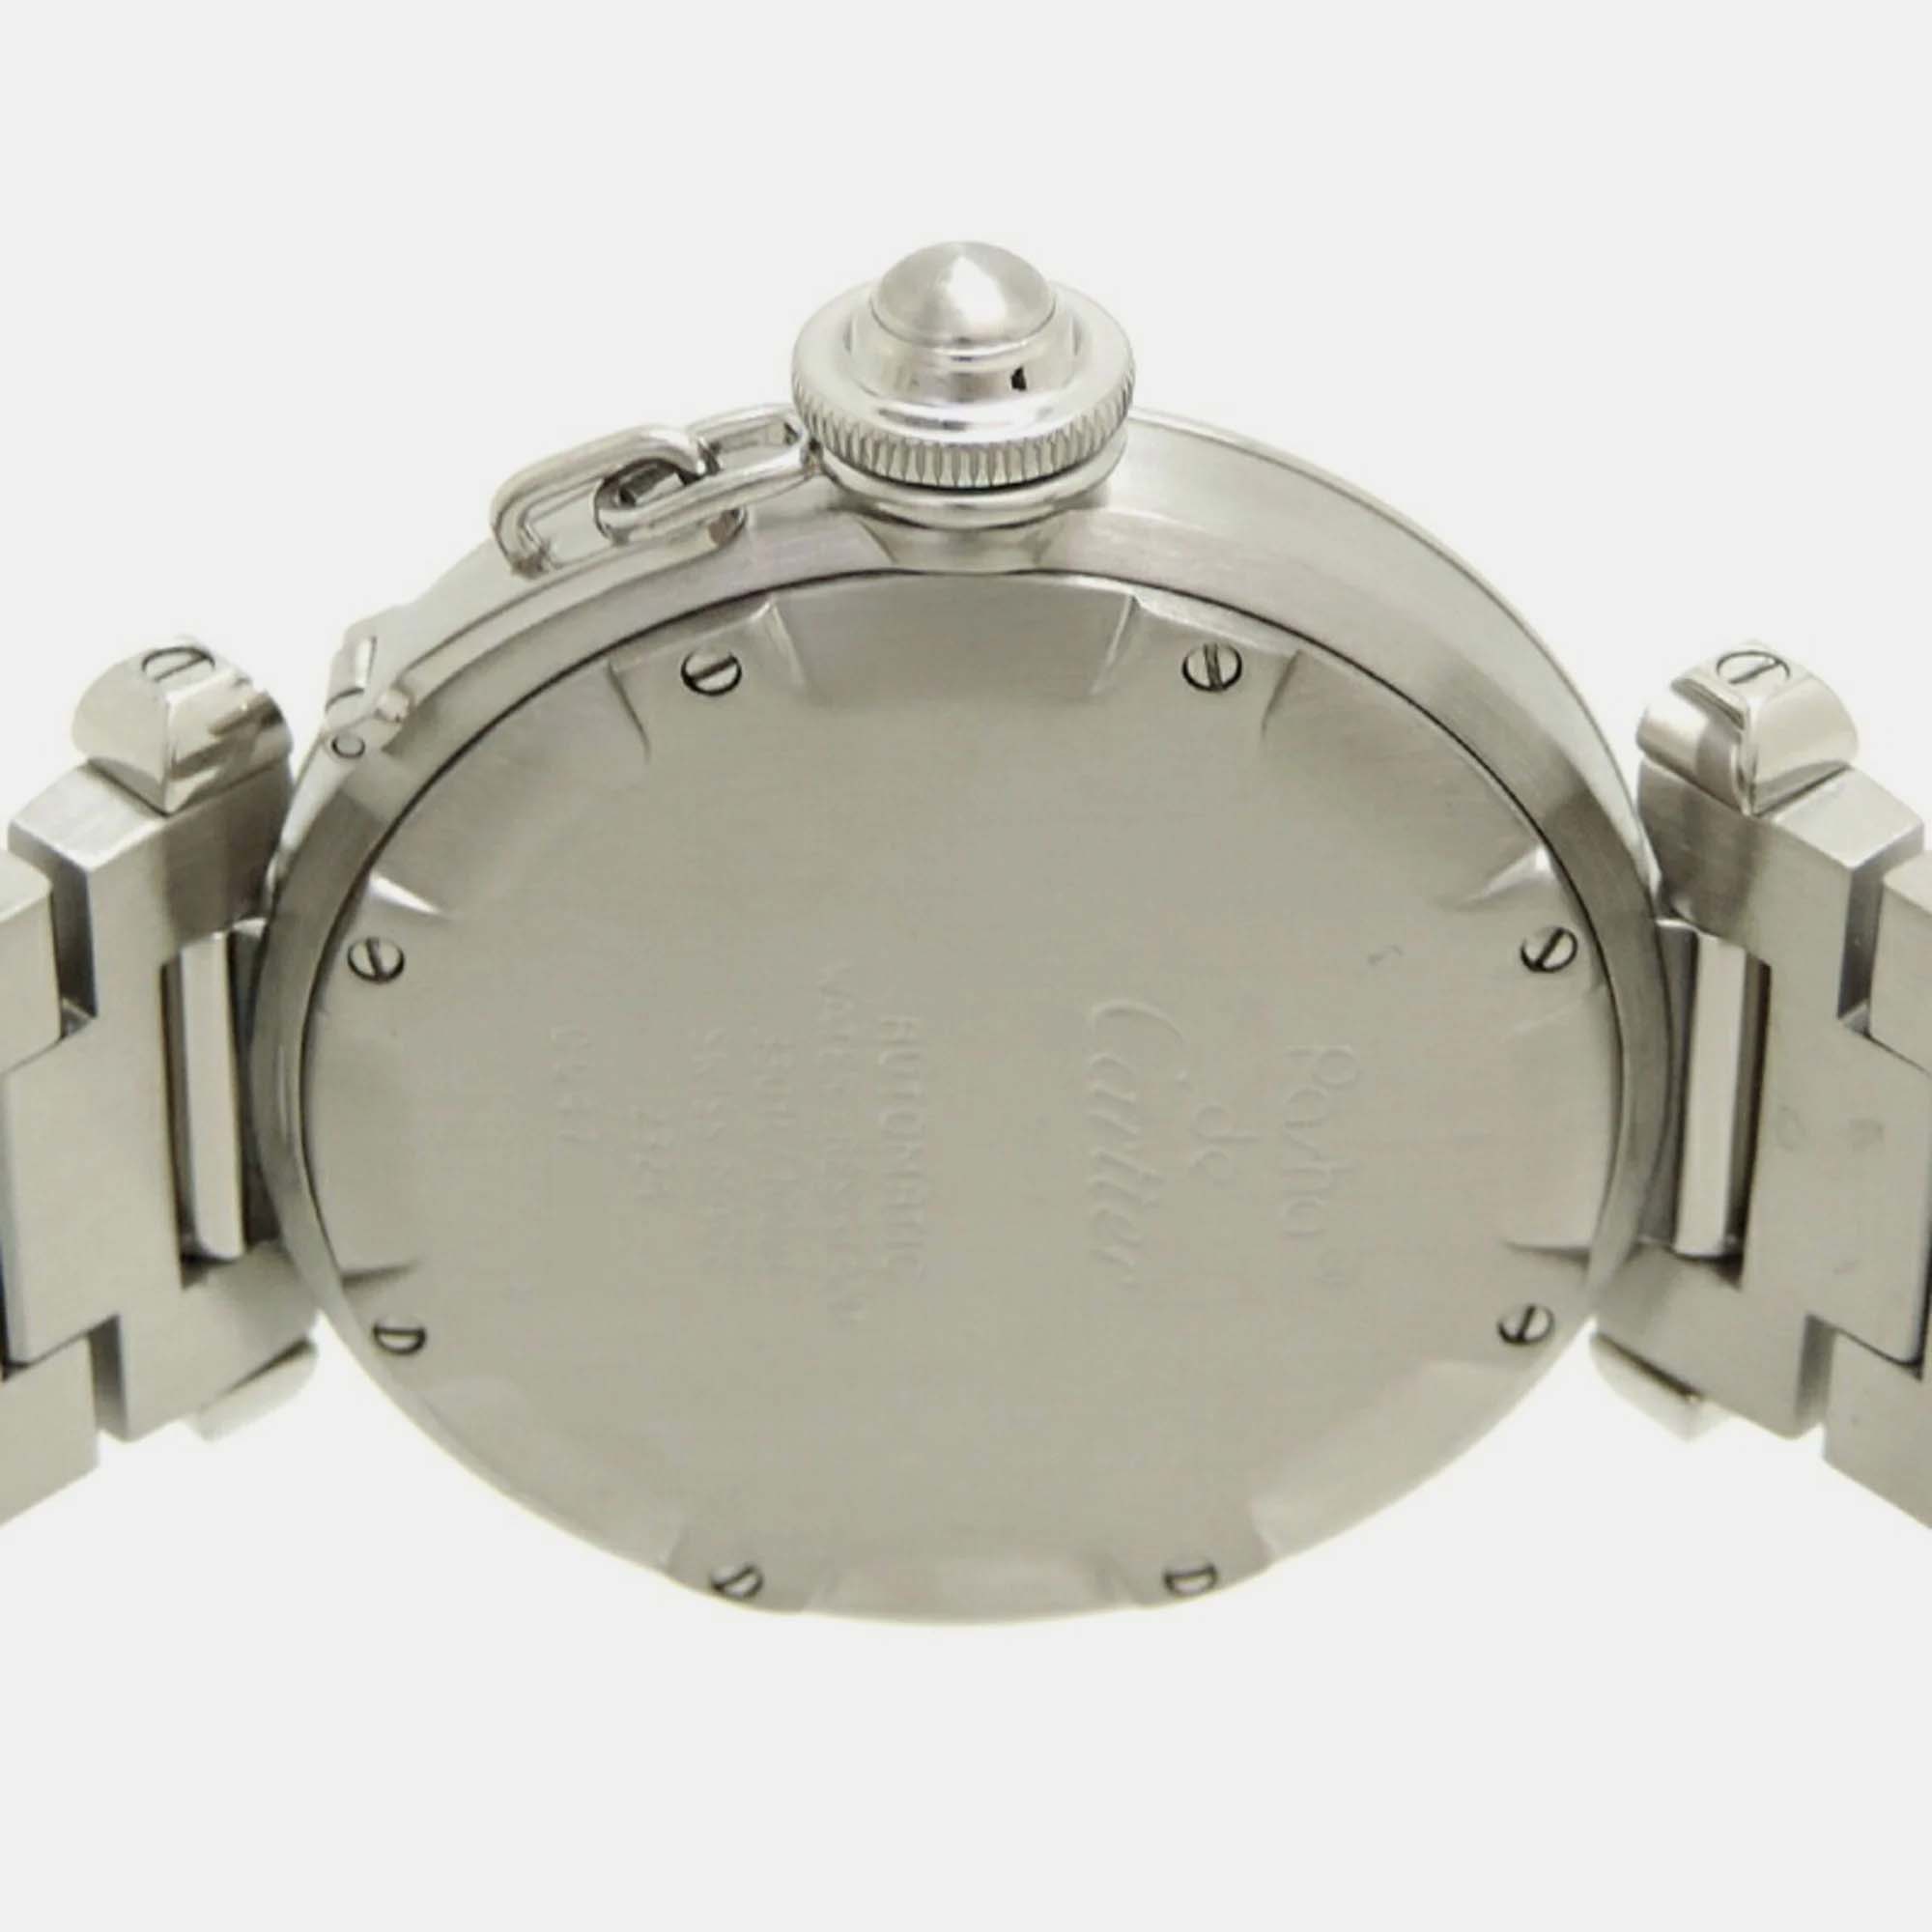 Cartier Silver Stainless Steel Pasha C De Cartier W31023M7 Automatic Women's Wristwatch 35 Mm